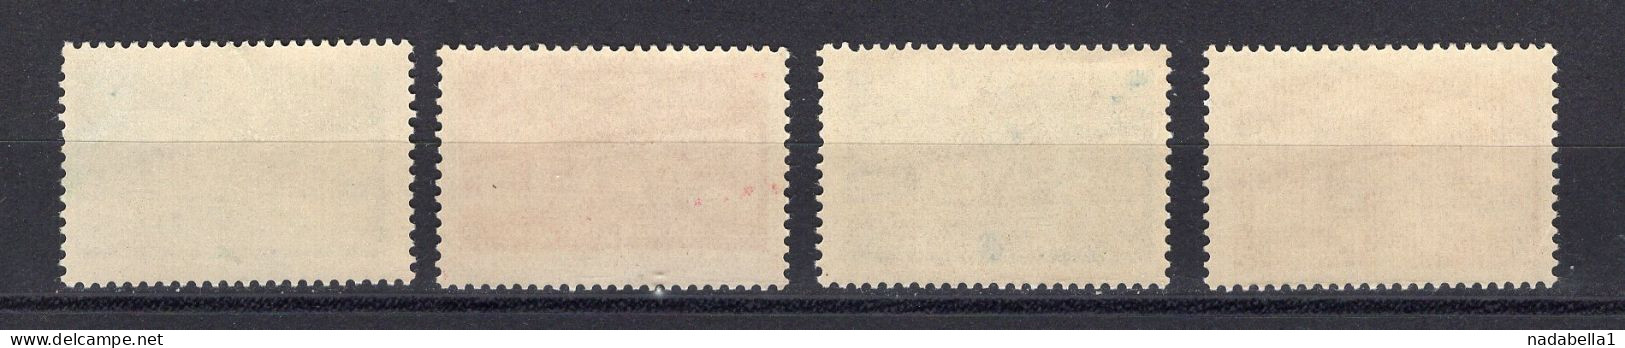 1948. YUGOSLAVIA,BELGRADE,DANUBE CONFERENCE,SET OF 4 STAMPS,MNH - Unused Stamps